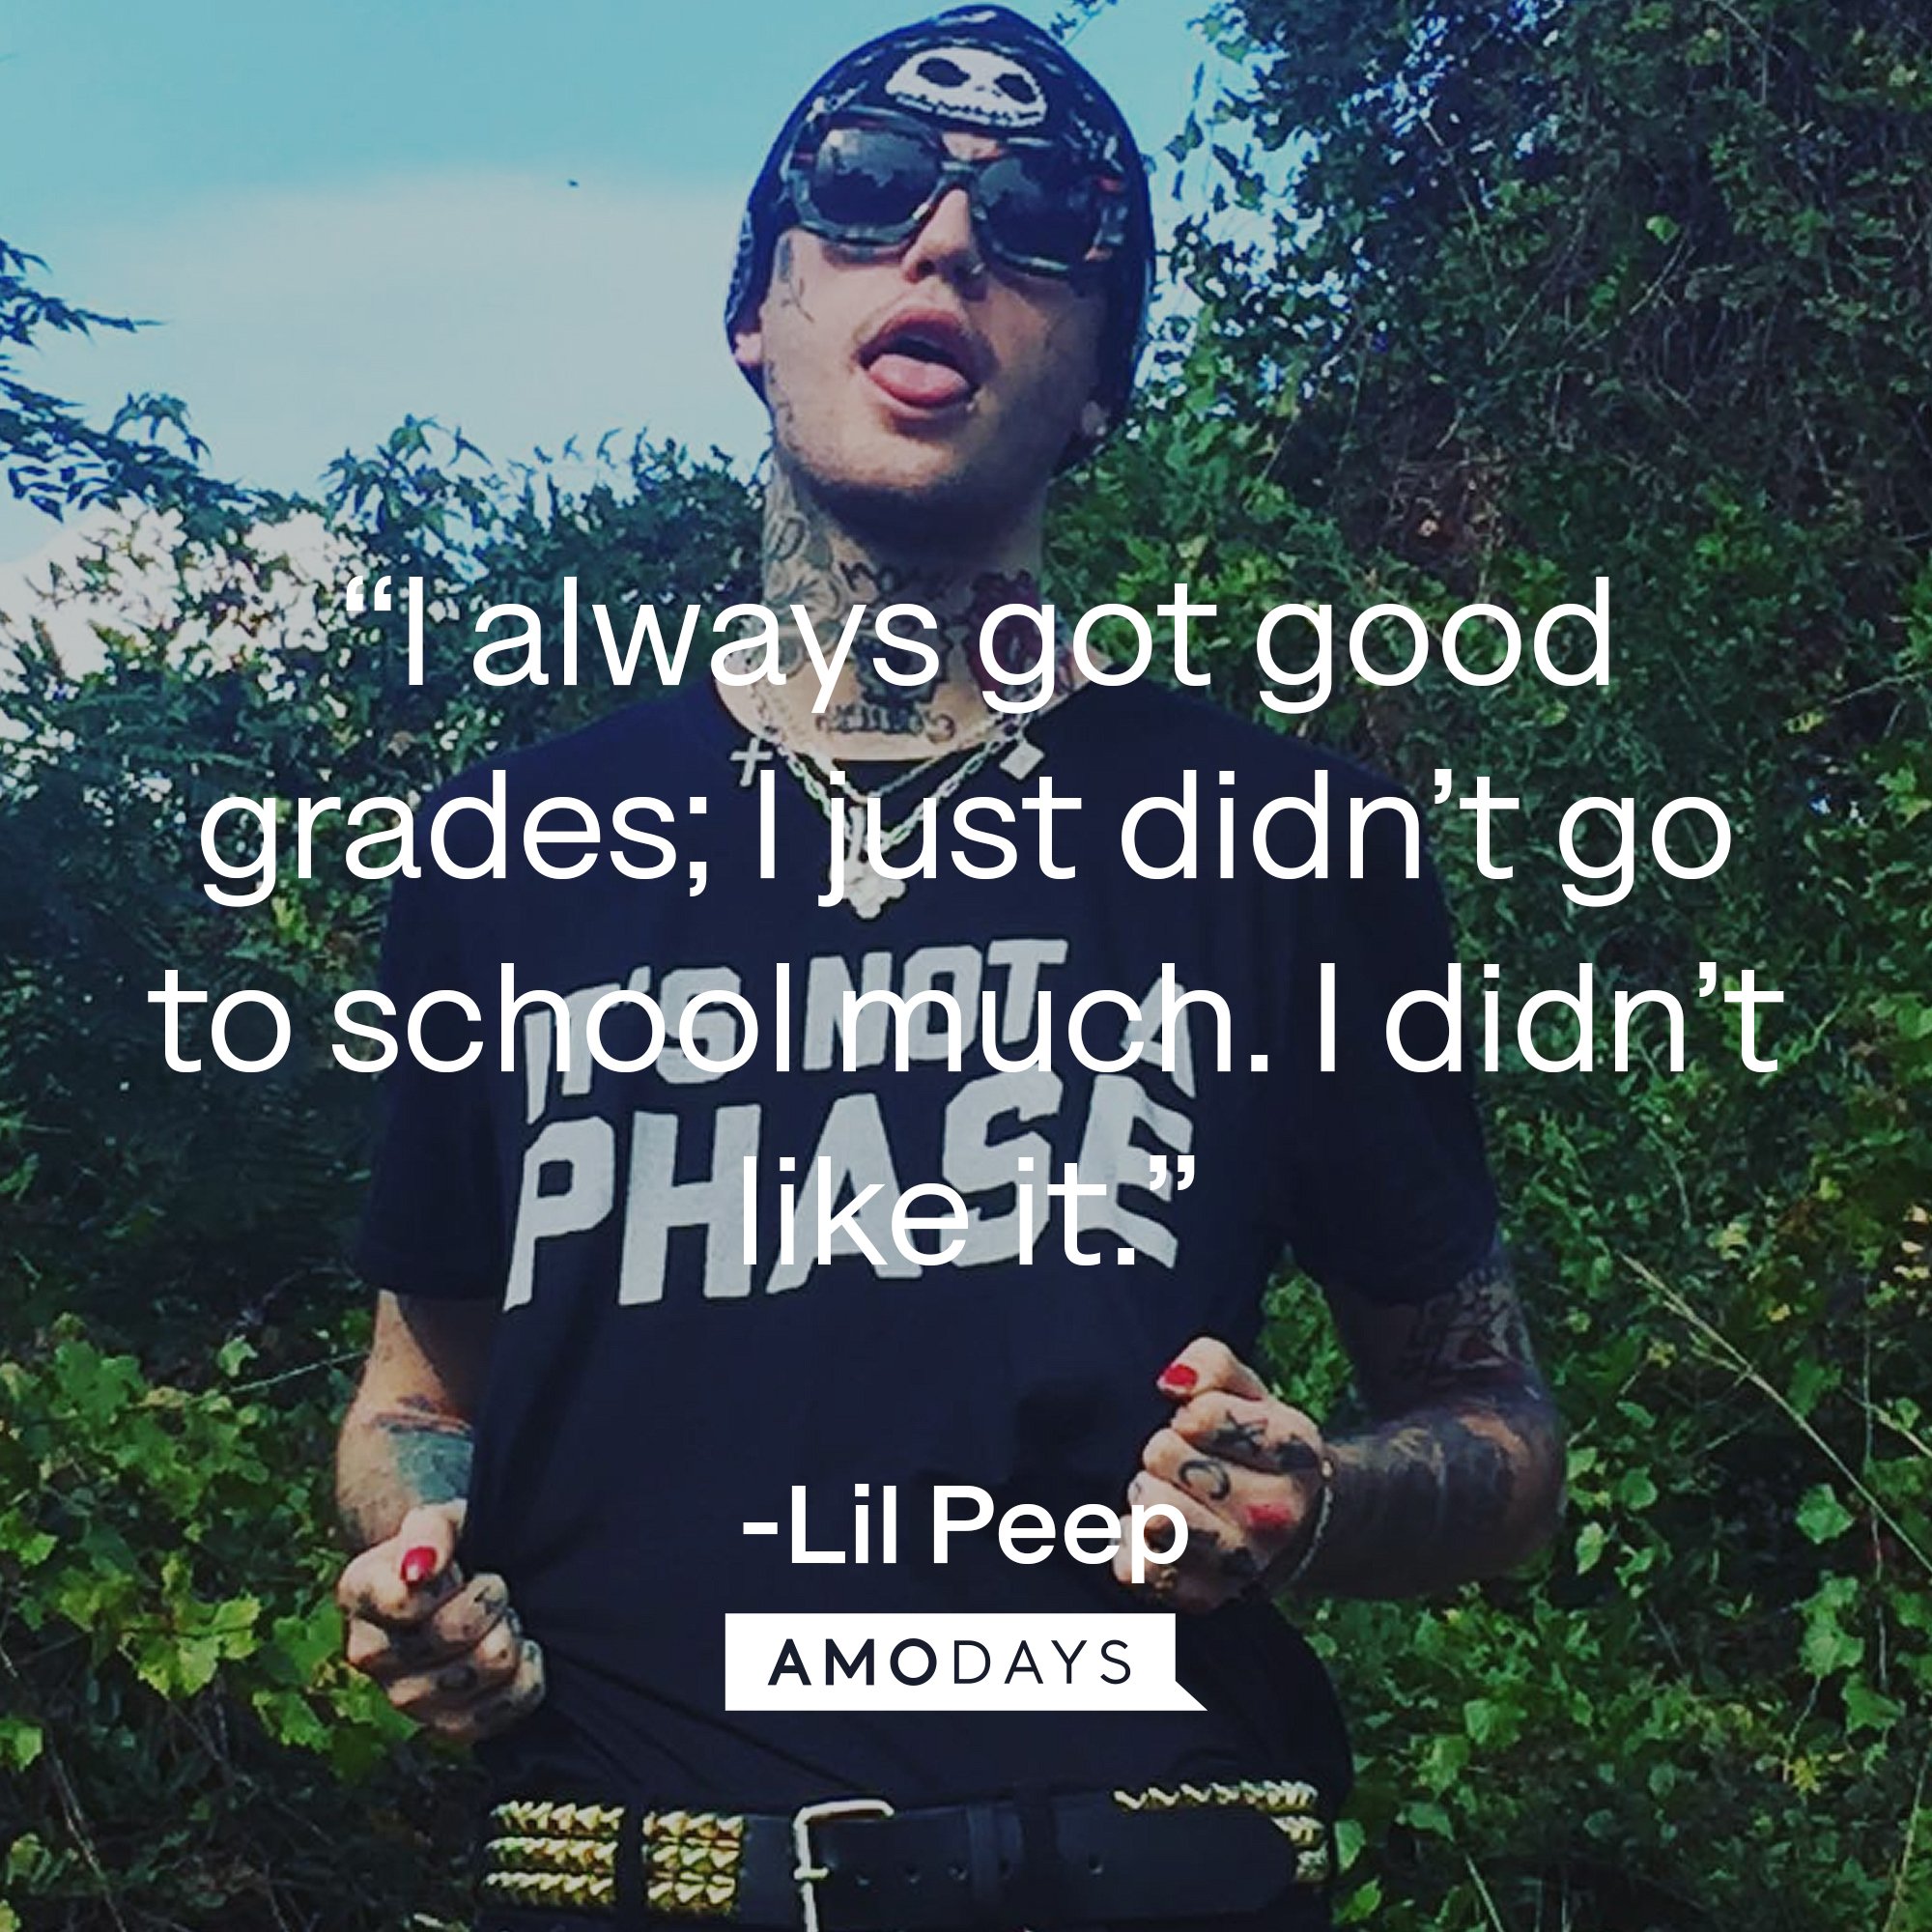 Lil Peep's quote: “I always got good grades; I just didn’t go to school much. I didn’t like it.” | Image: AmoDays